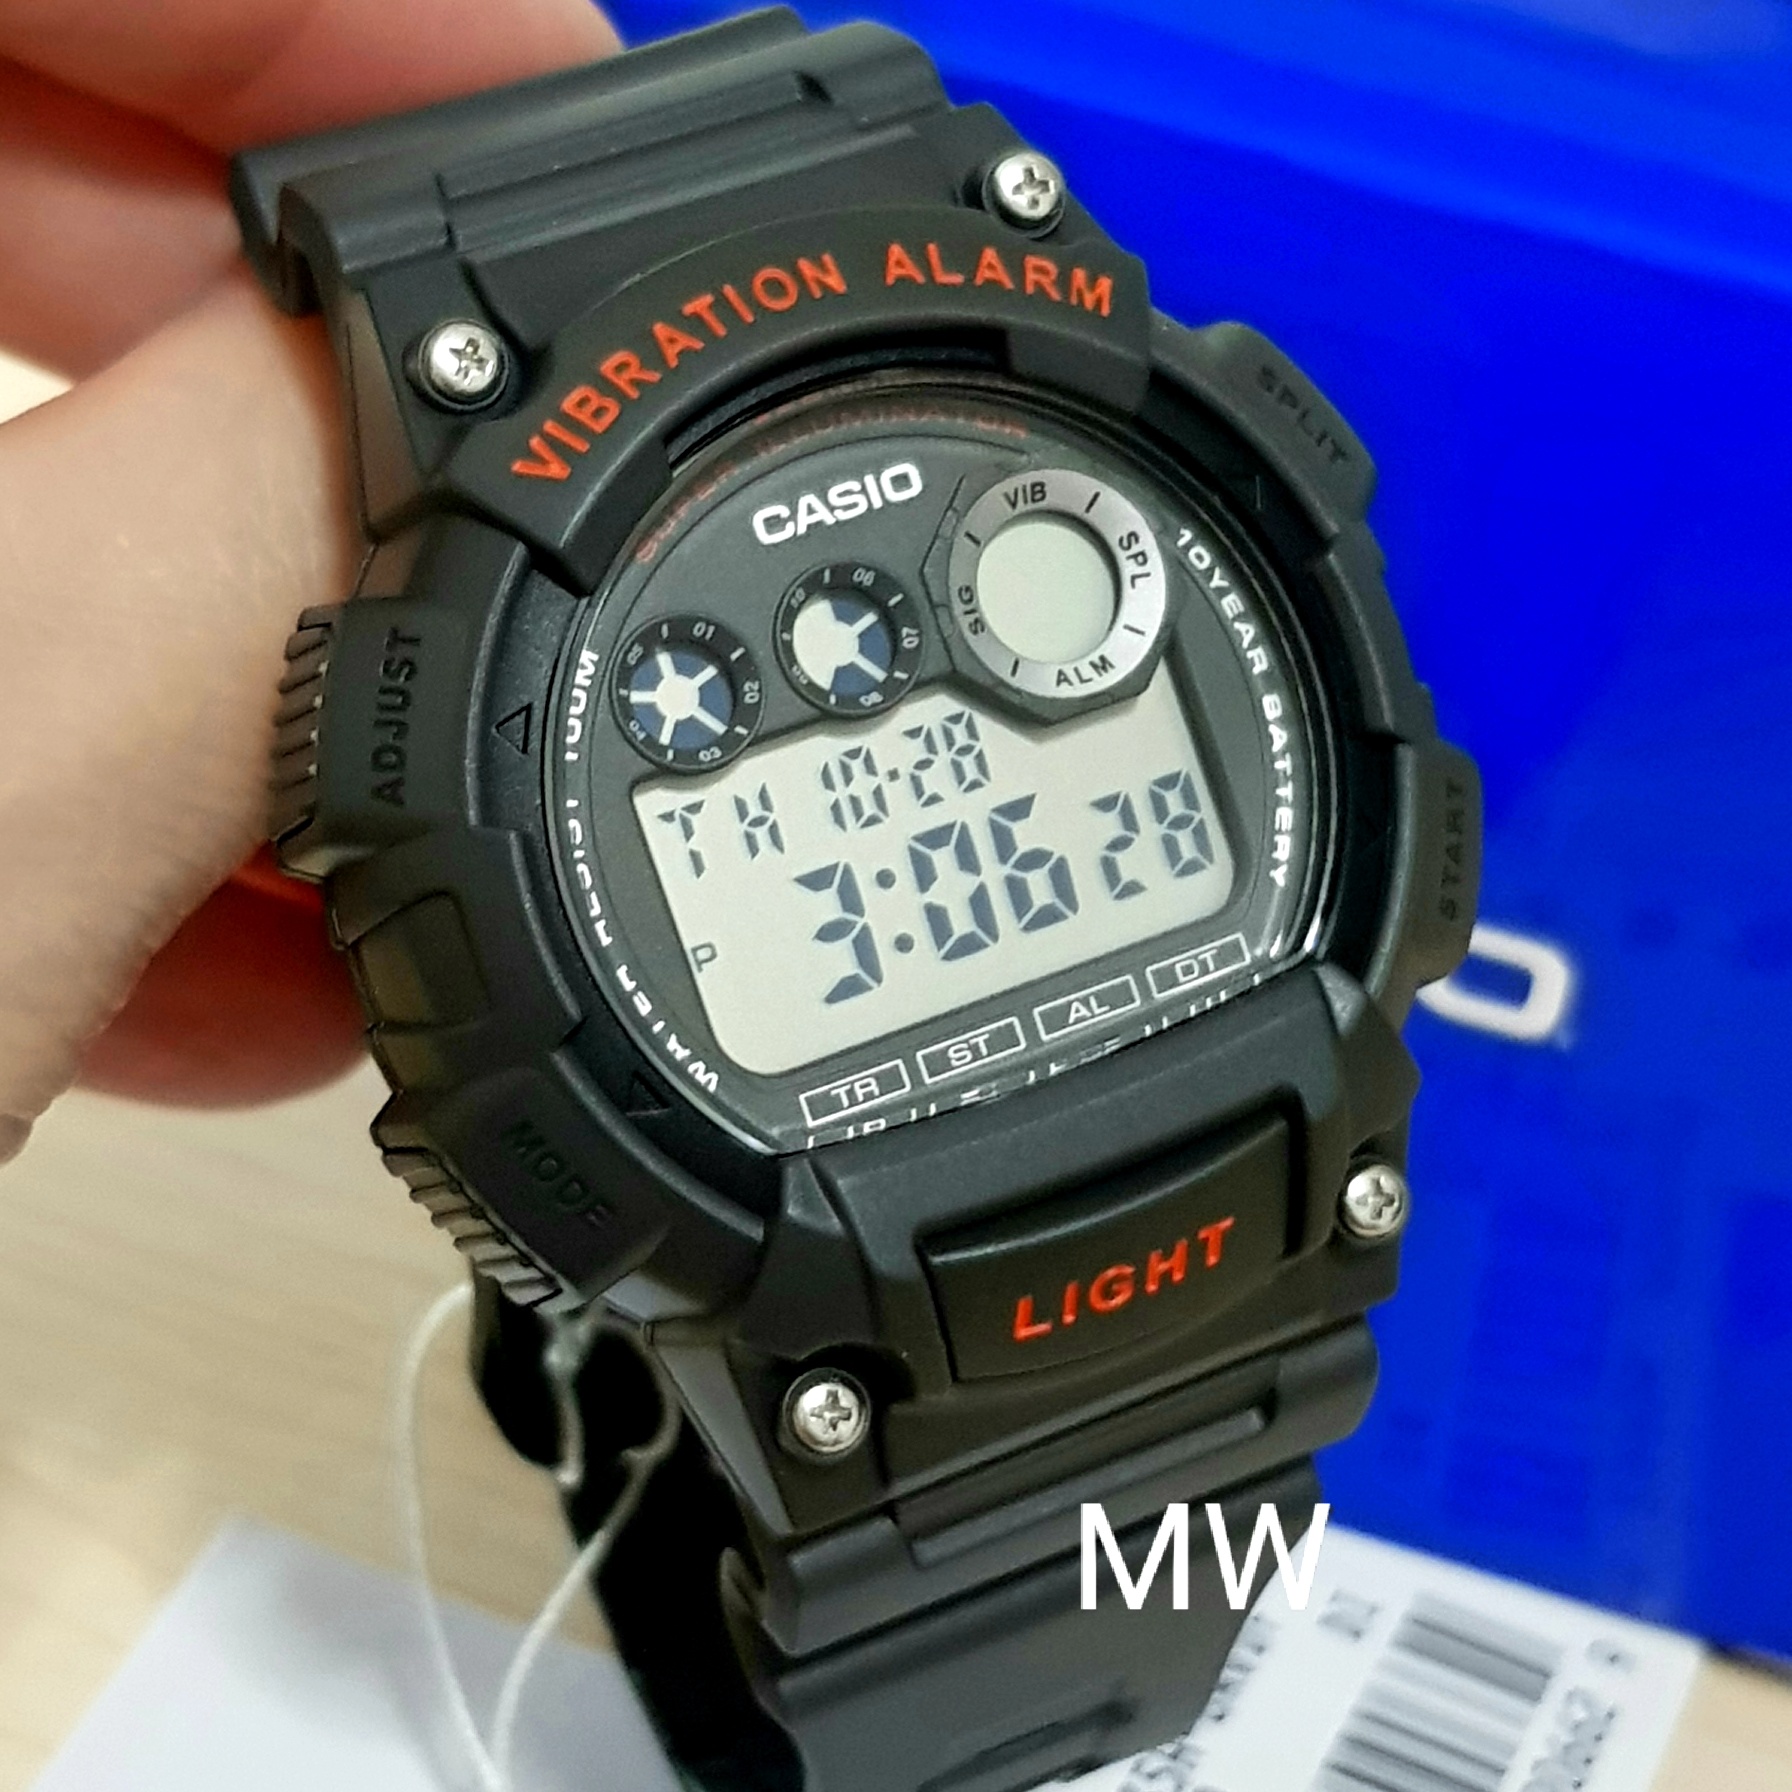 digital watch with vibration alarm